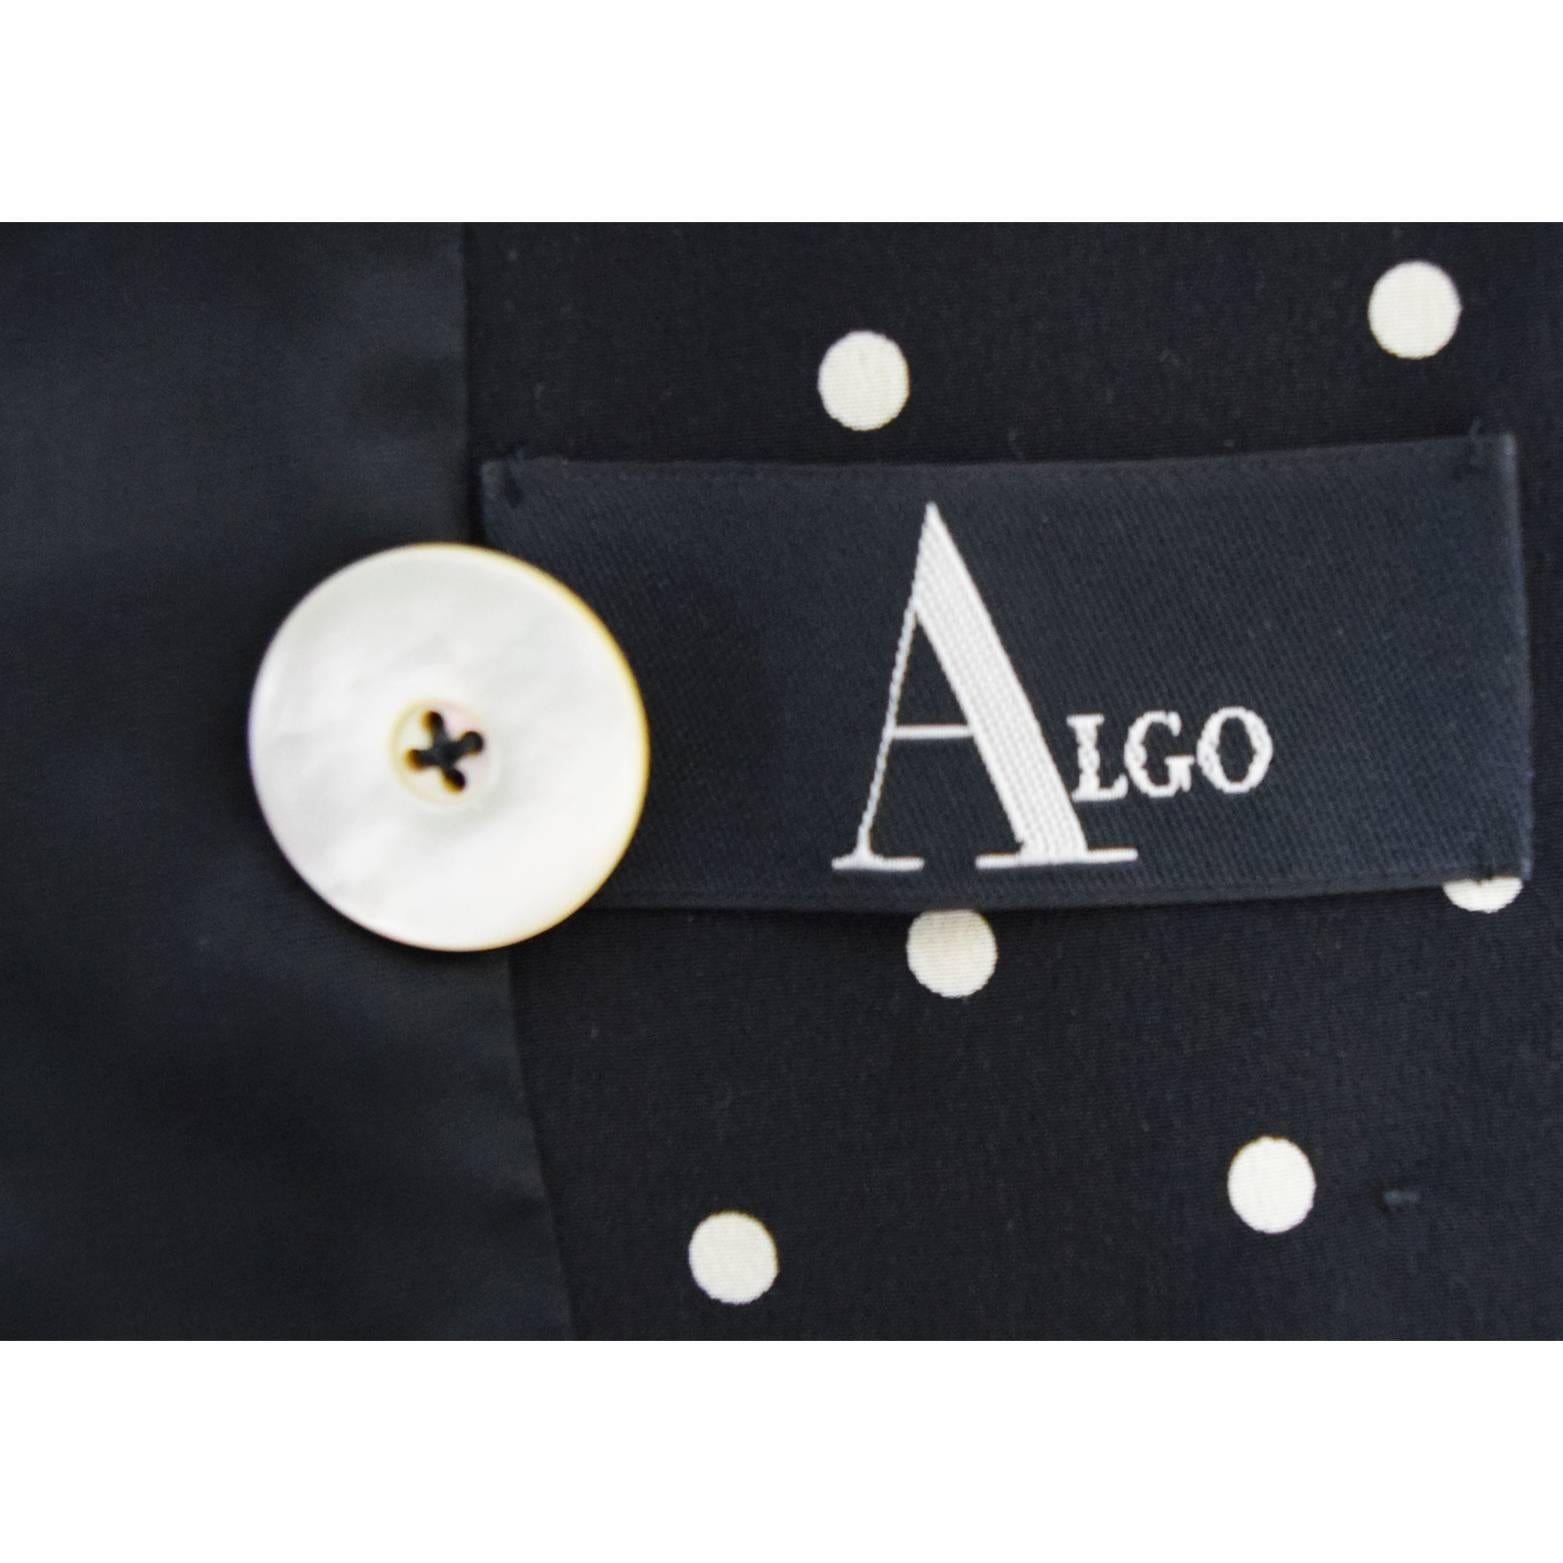 Algo Black and White Polka Dot Two Piece Skirt and Jacket Ensemble  For Sale 3